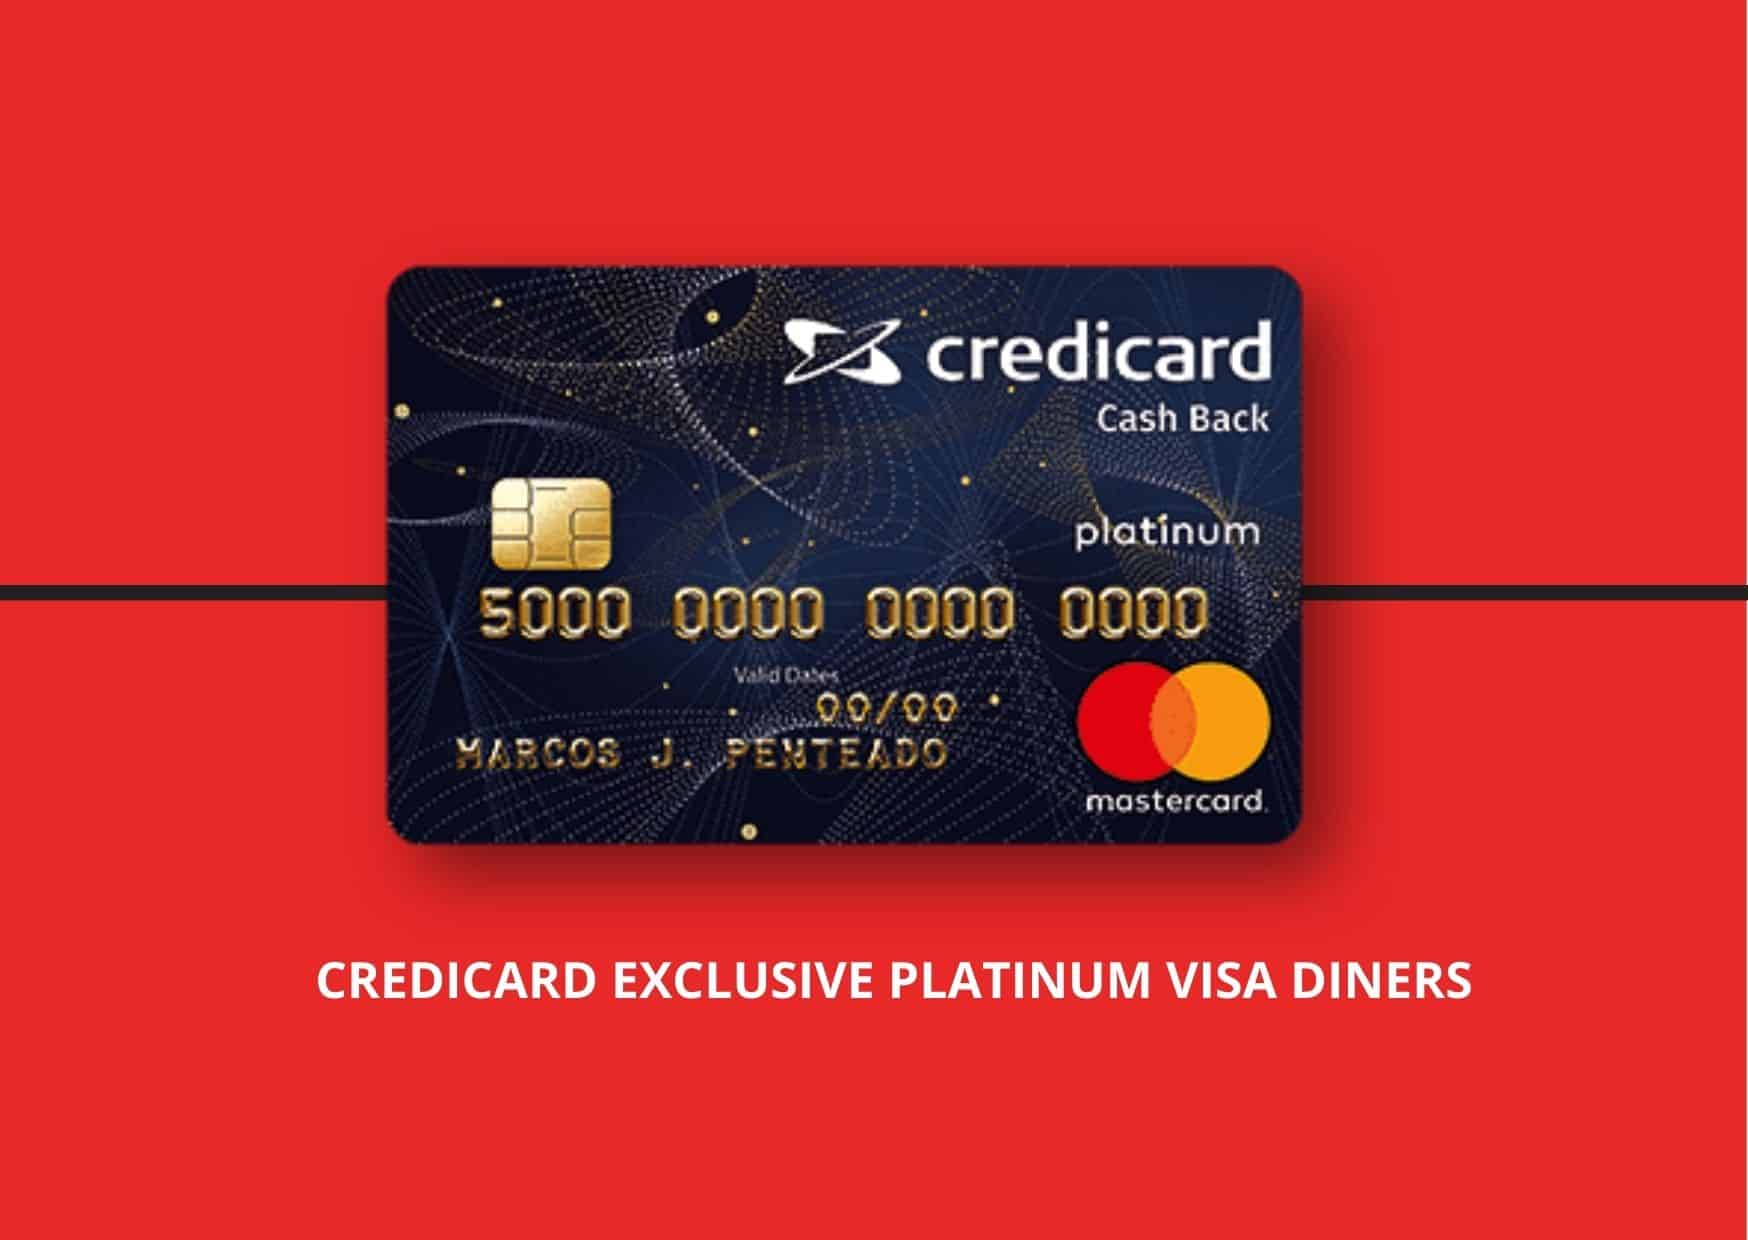 Credicard Exclusive Platinum Visa Diners Vale A Pena 7443